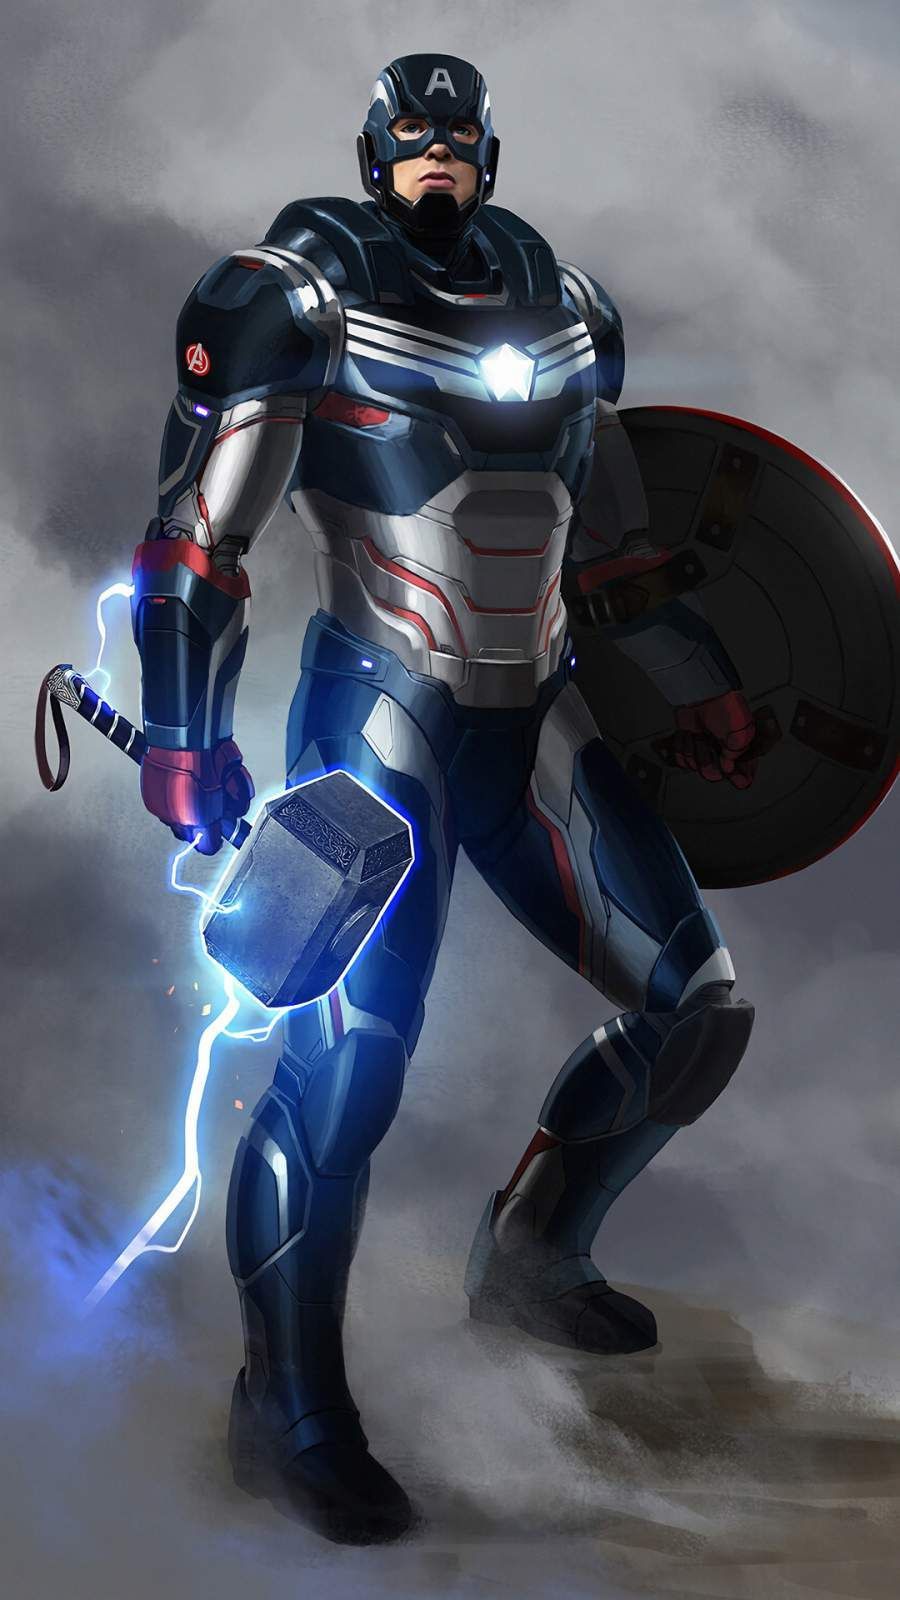 Captain America Armored iPhone Wallpaper. Marvel superhero posters, Captain america artwork, Marvel comics superheroes